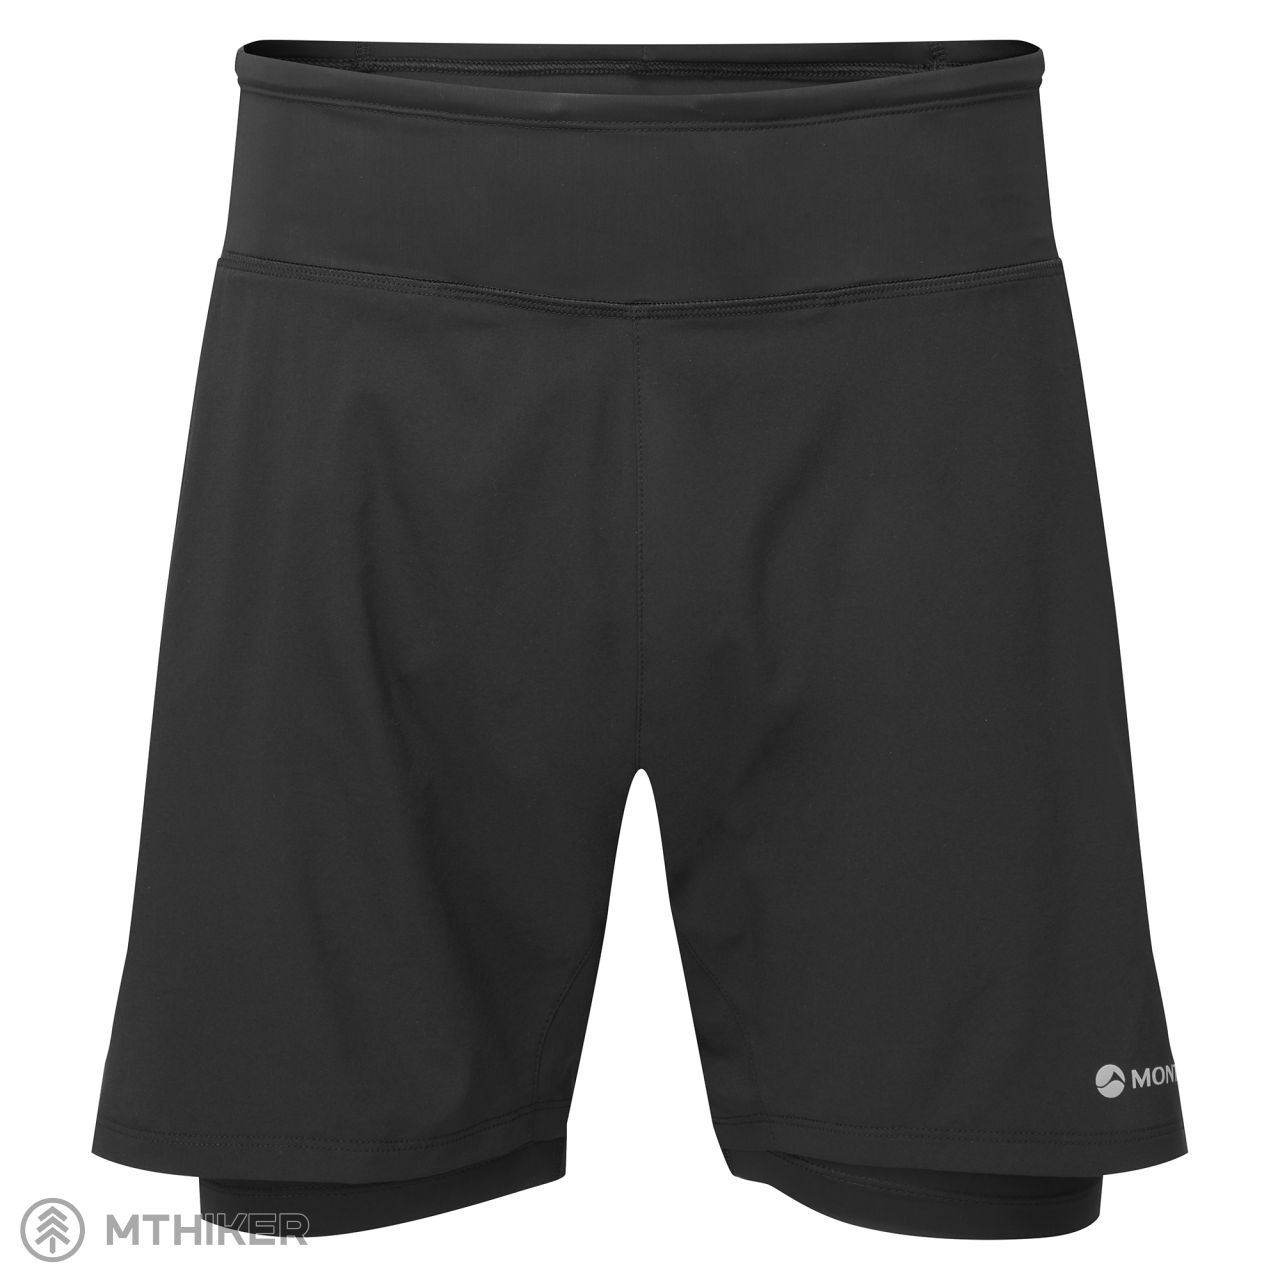 Montane SLIPSTREAM TWIN SKIN shorts, black